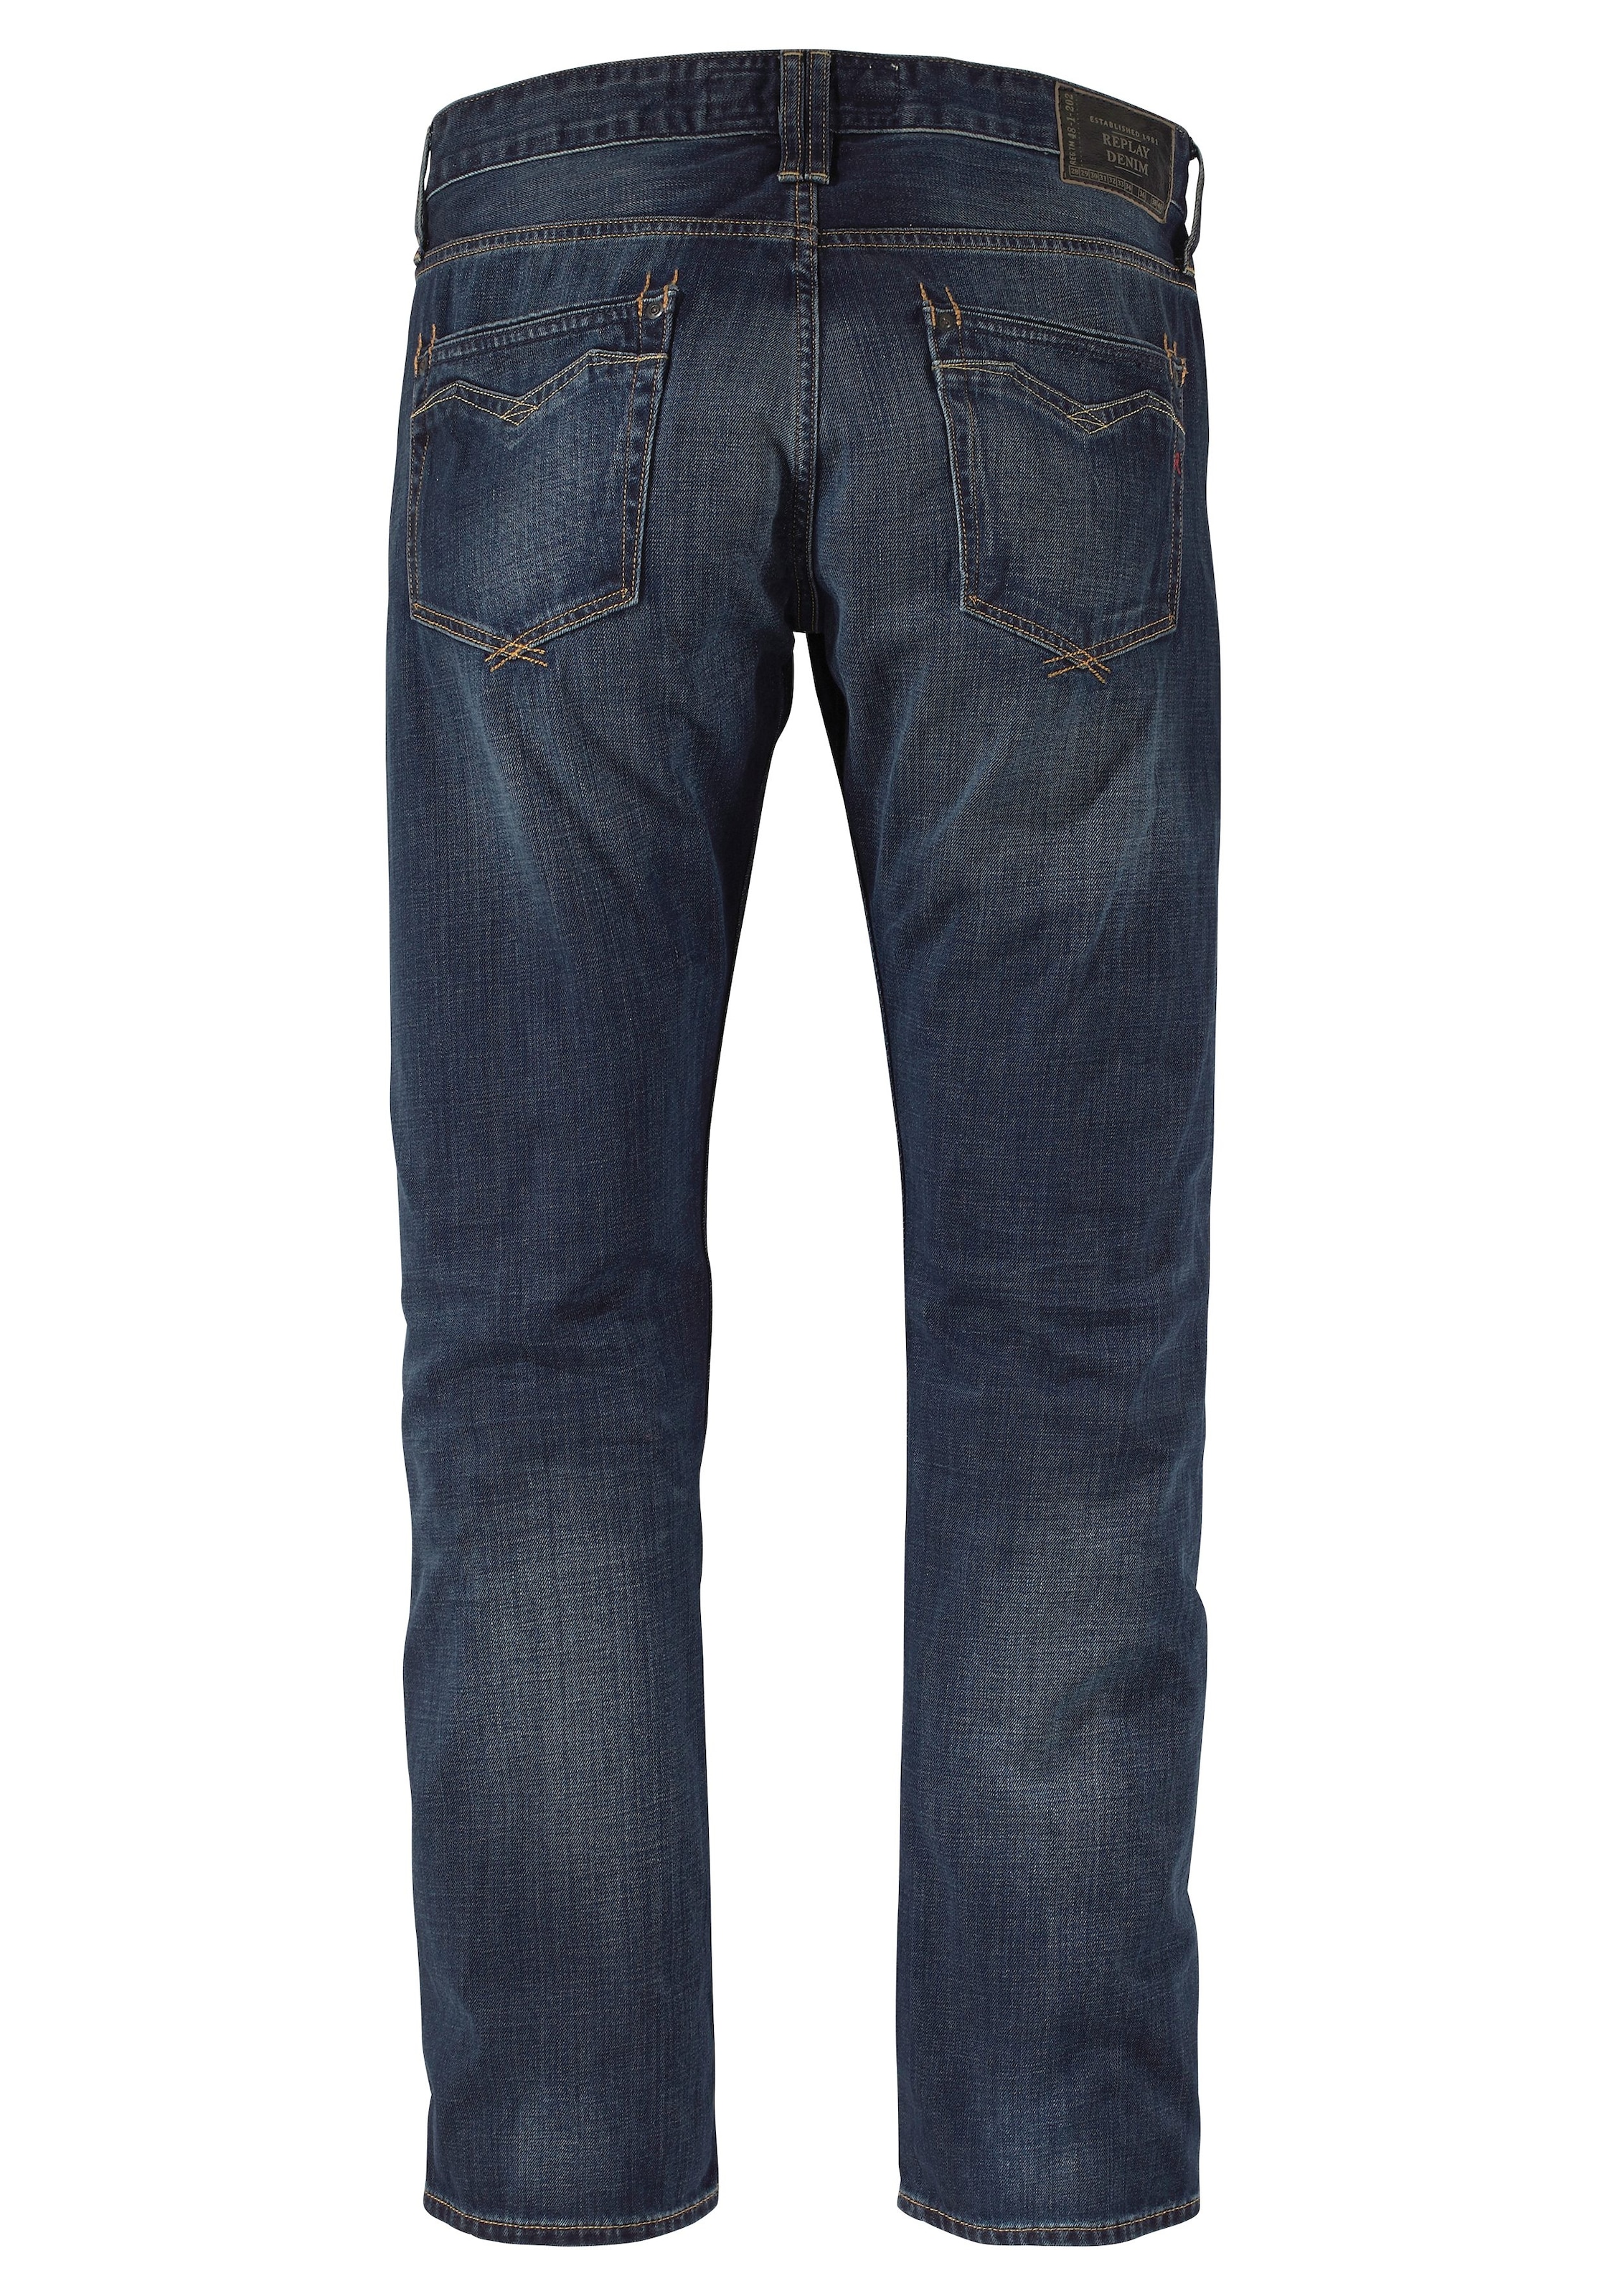 William Rast Straight-Fit Stretch Jeans (Lagoon